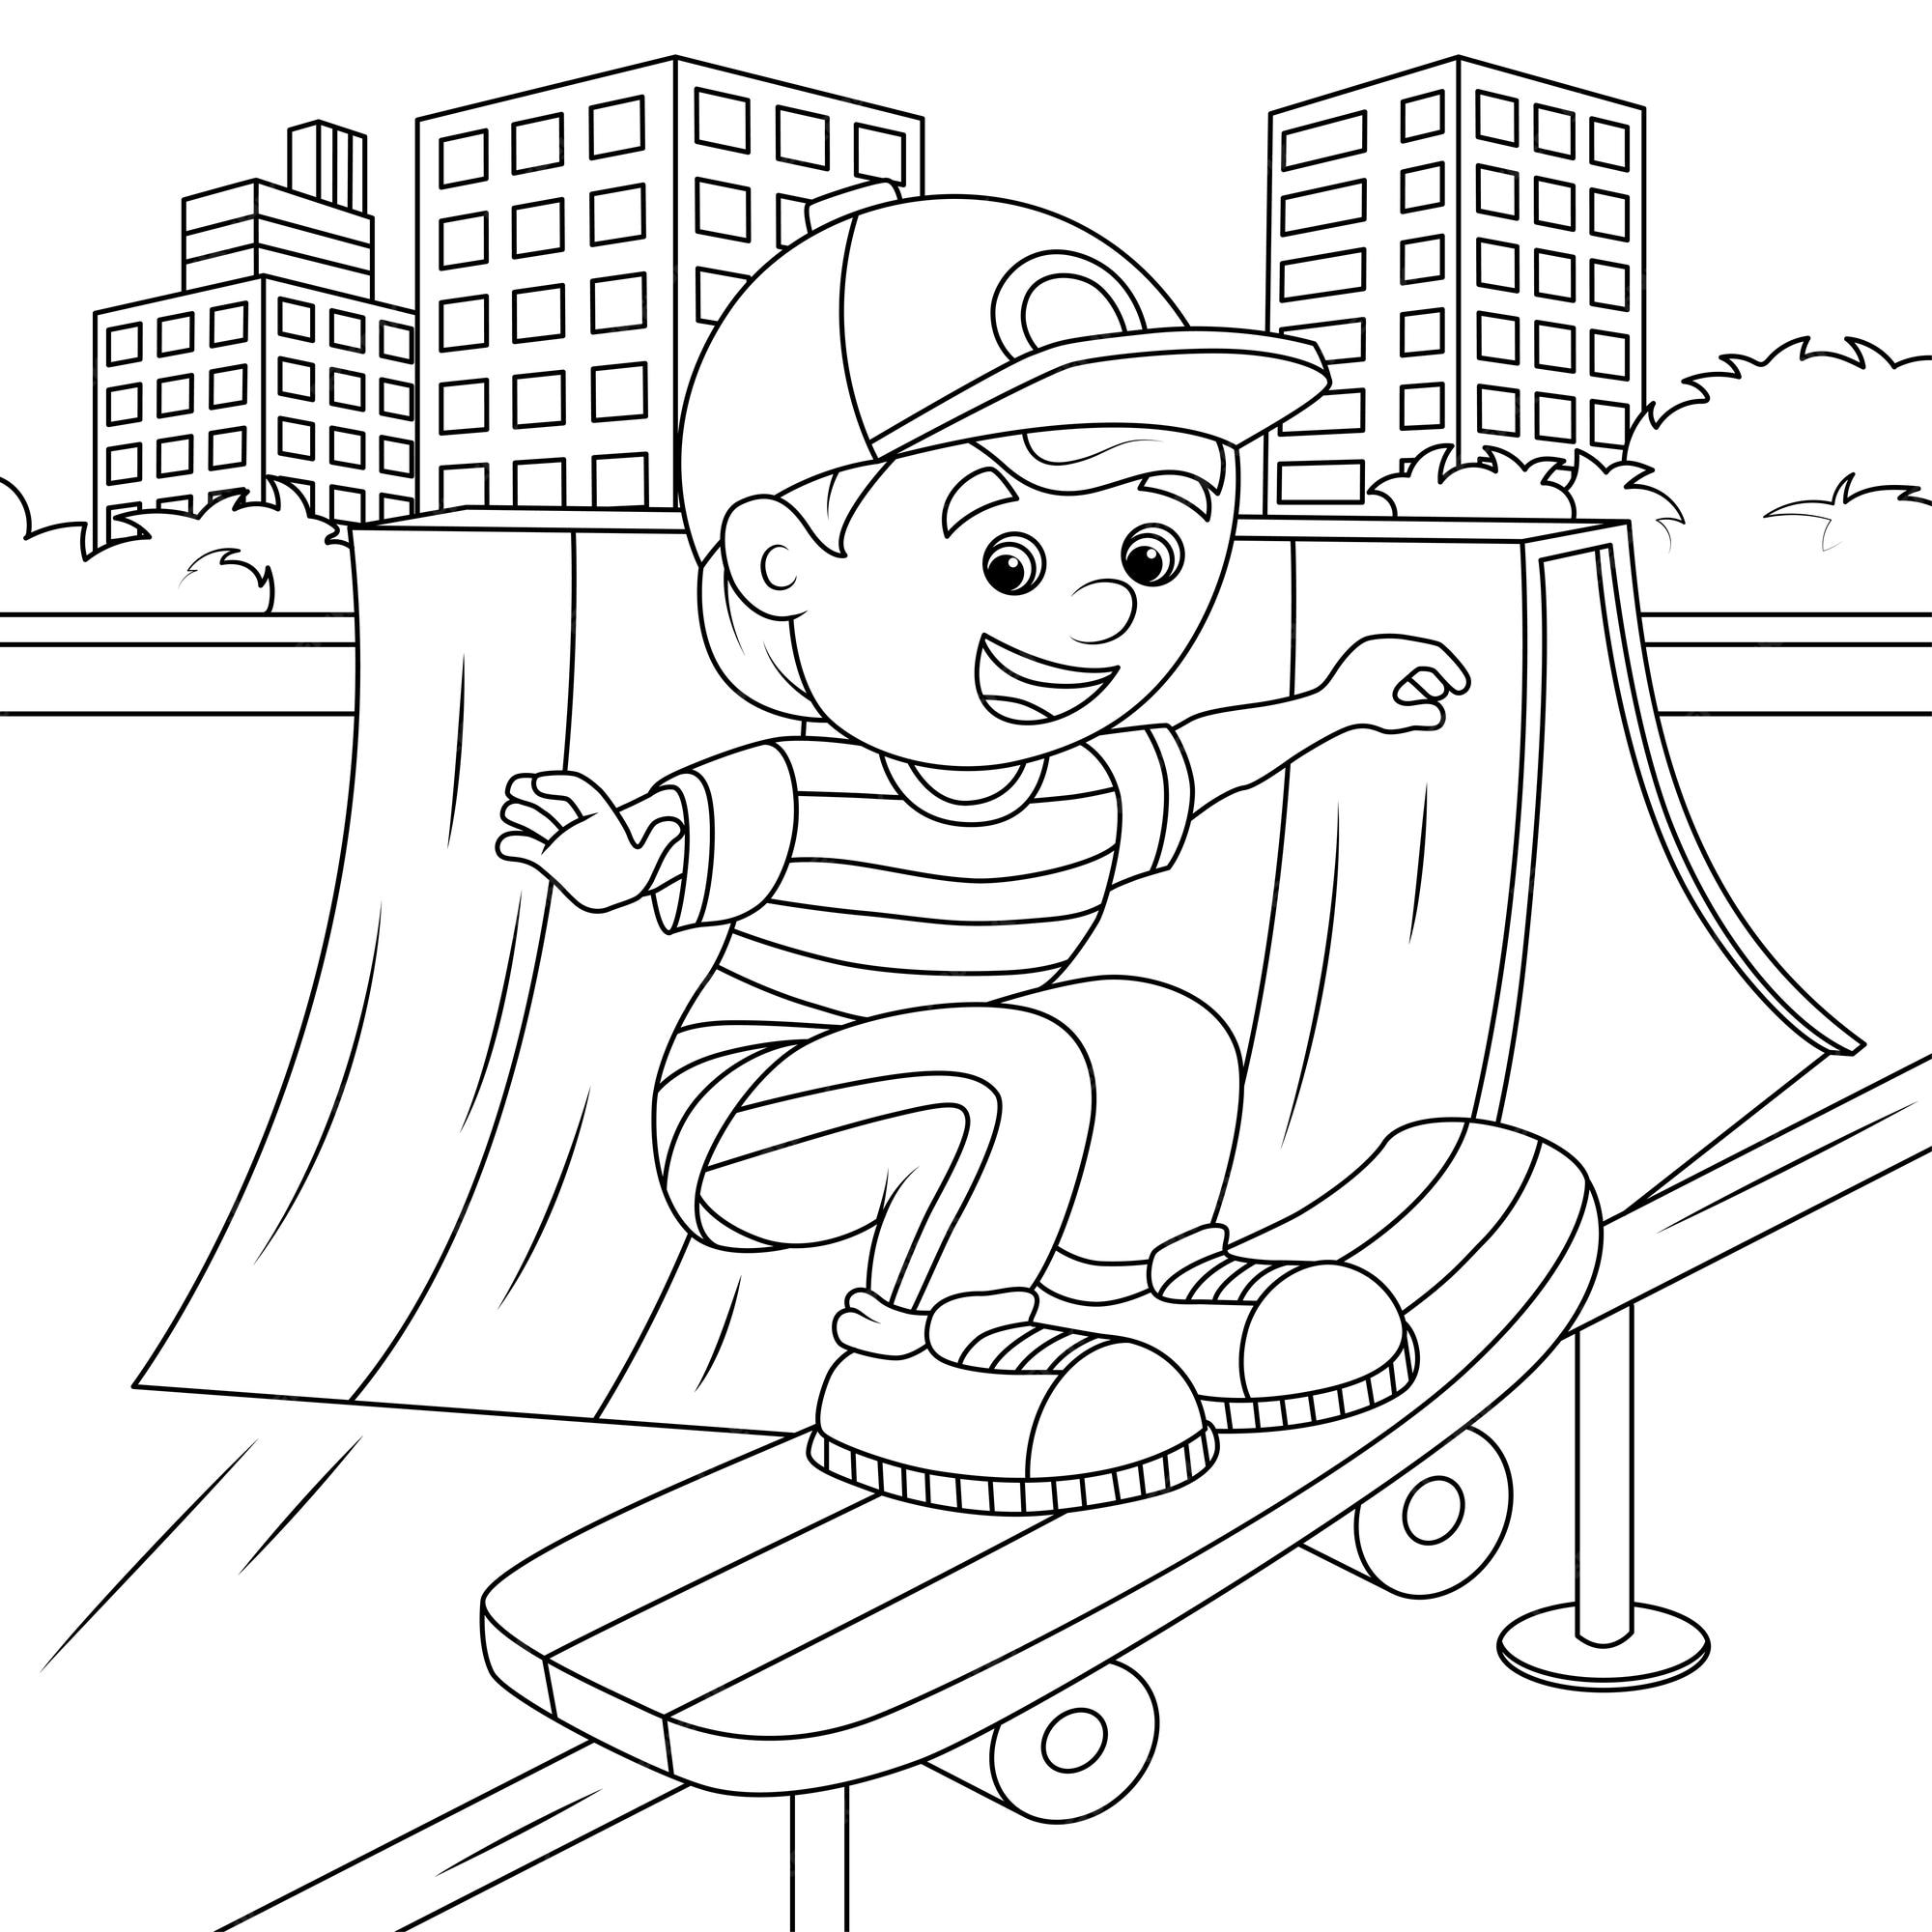 Premium vector a boy rides a skateboard at the skatepark coloring book for children